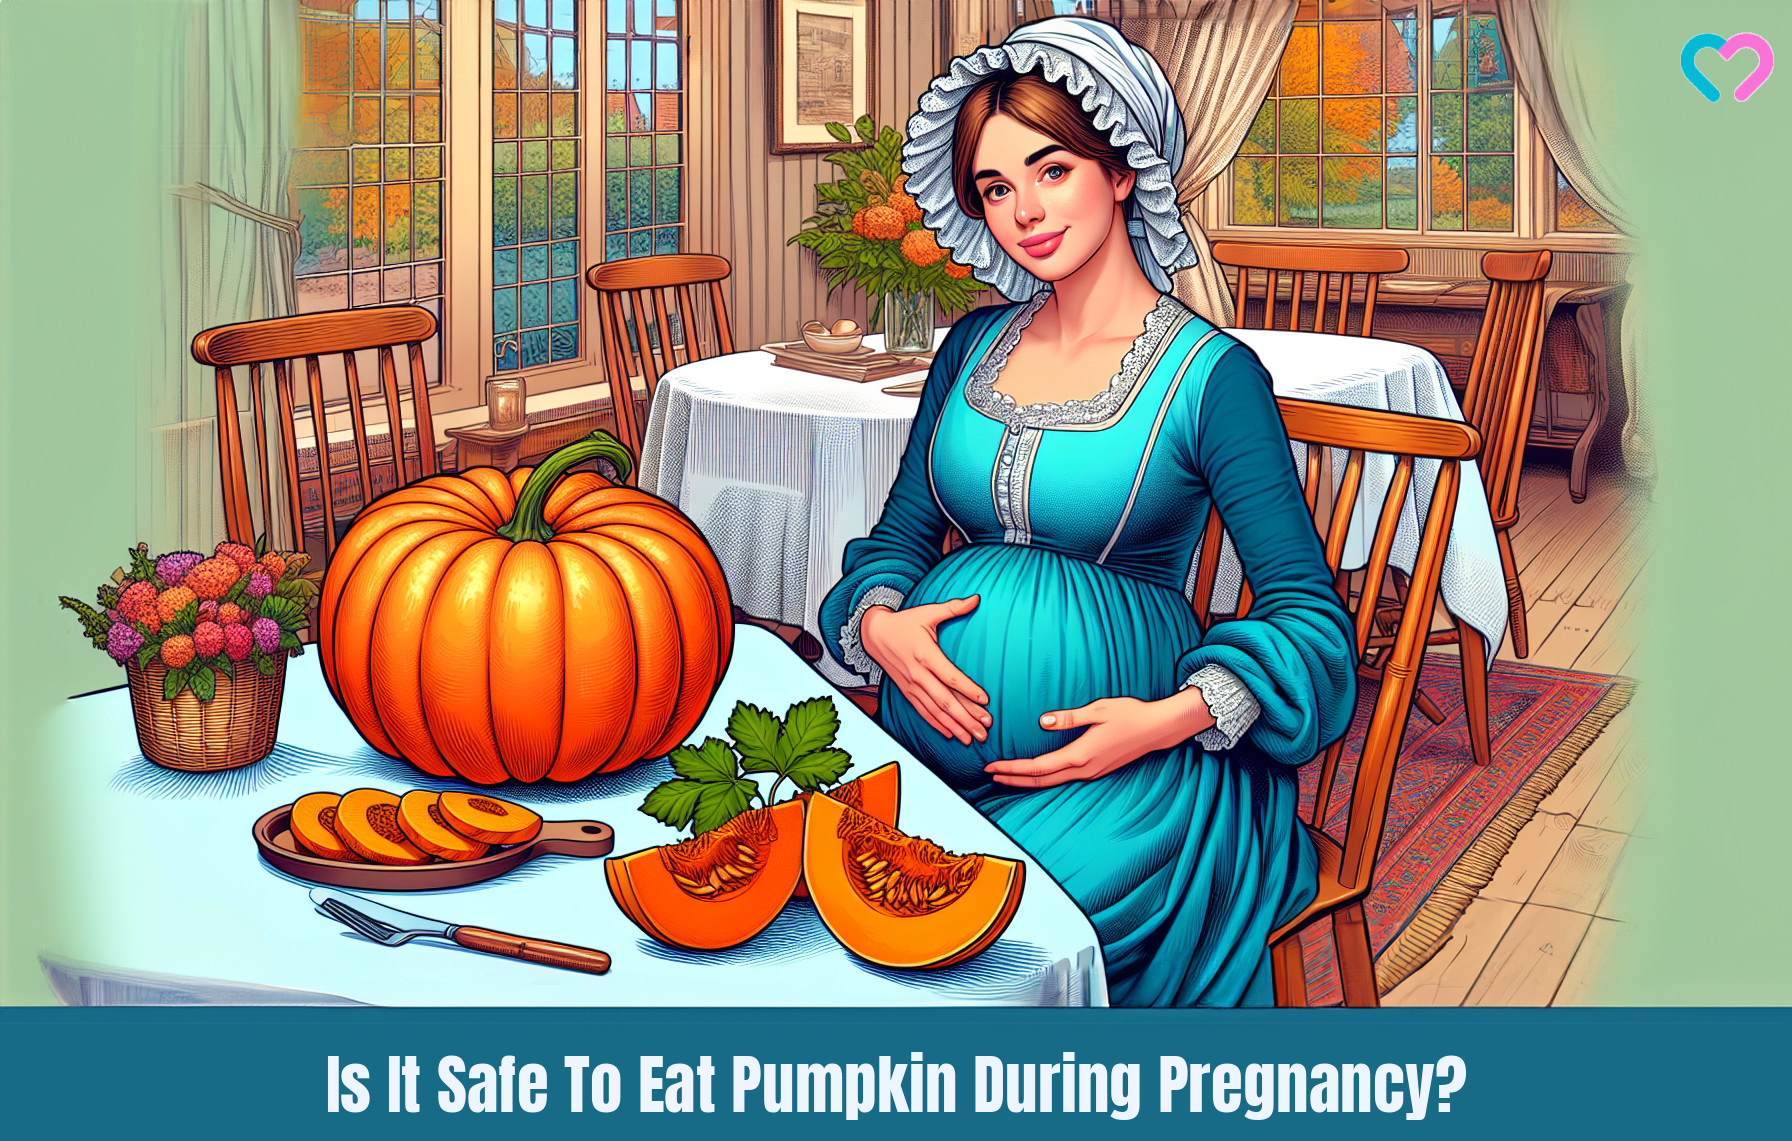 Pumpkin During Pregnancy_illustration